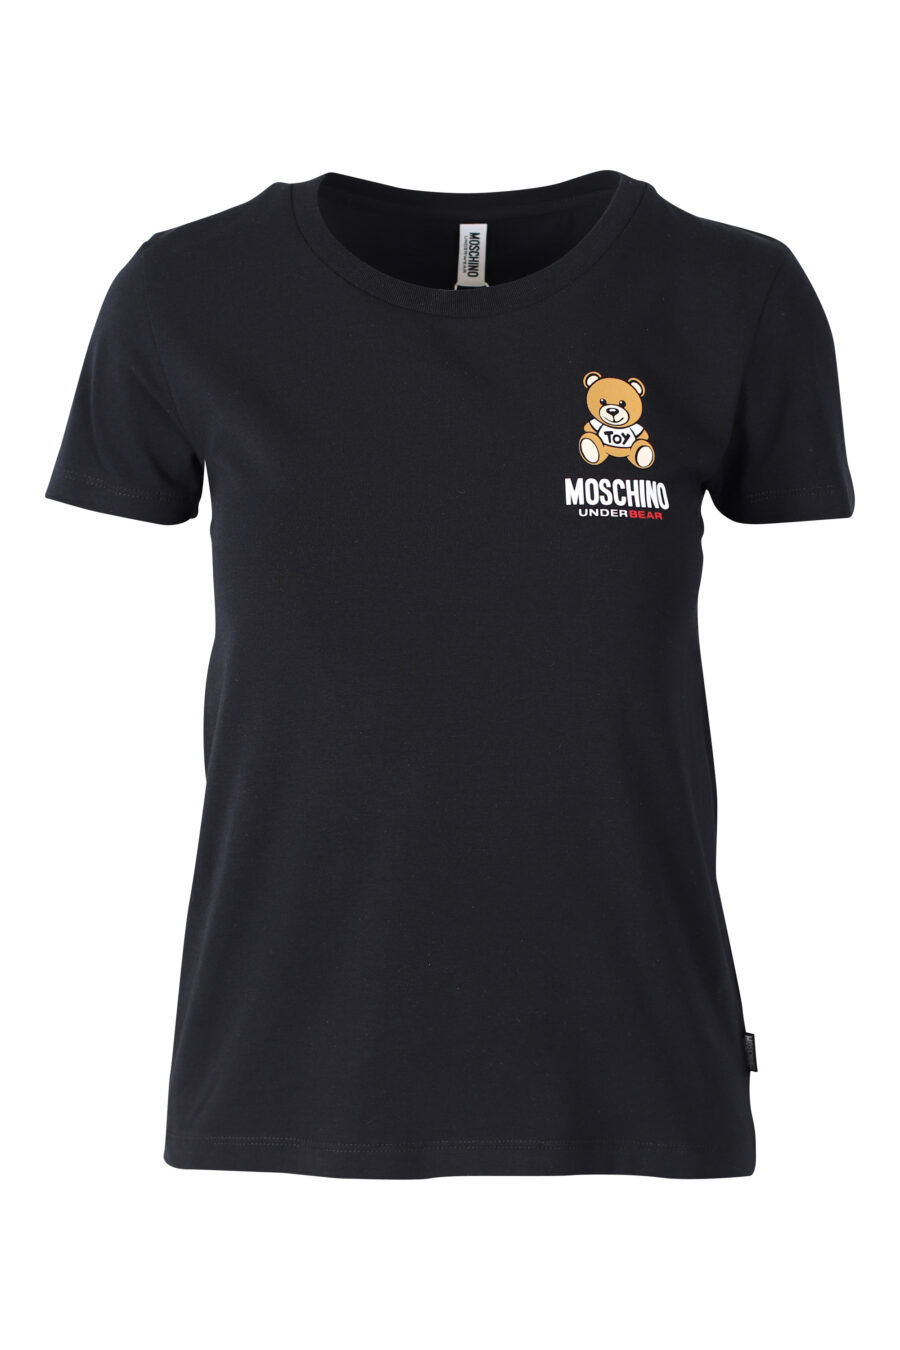 Camiseta negra slim fit con logo oso underbear - IMG 2370